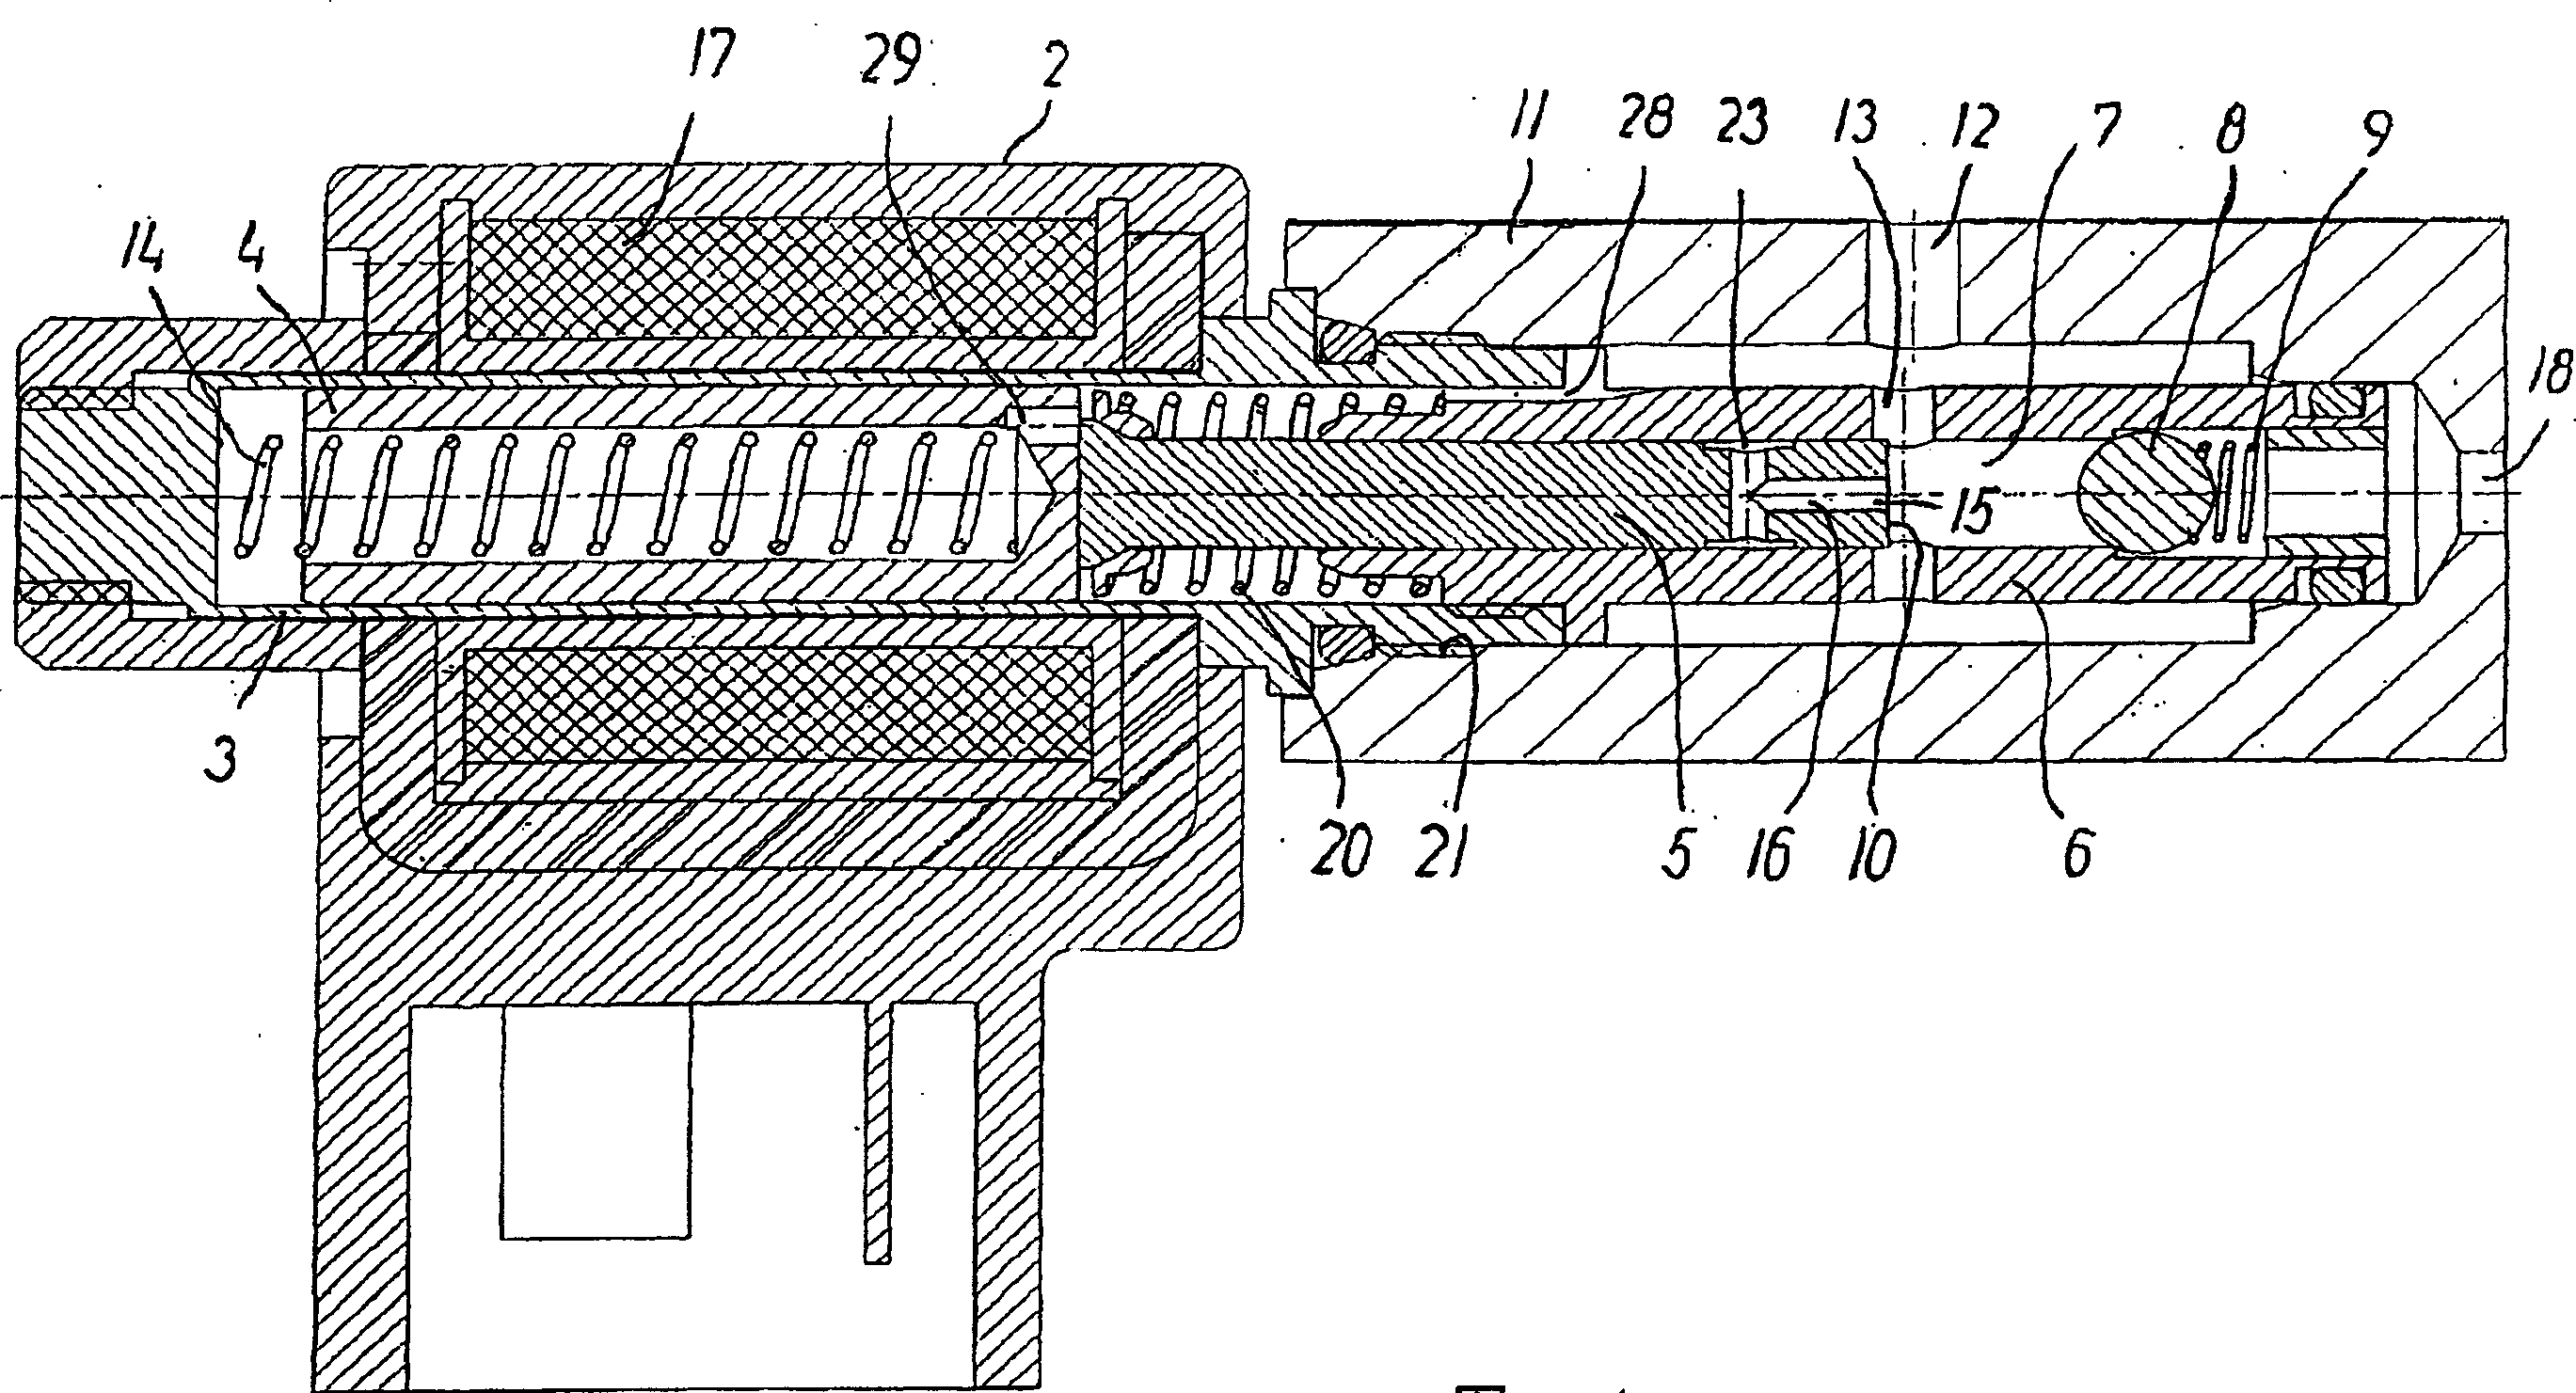 A reciprocating liquid pump for delivery of liquid fuel to a domestic burner device